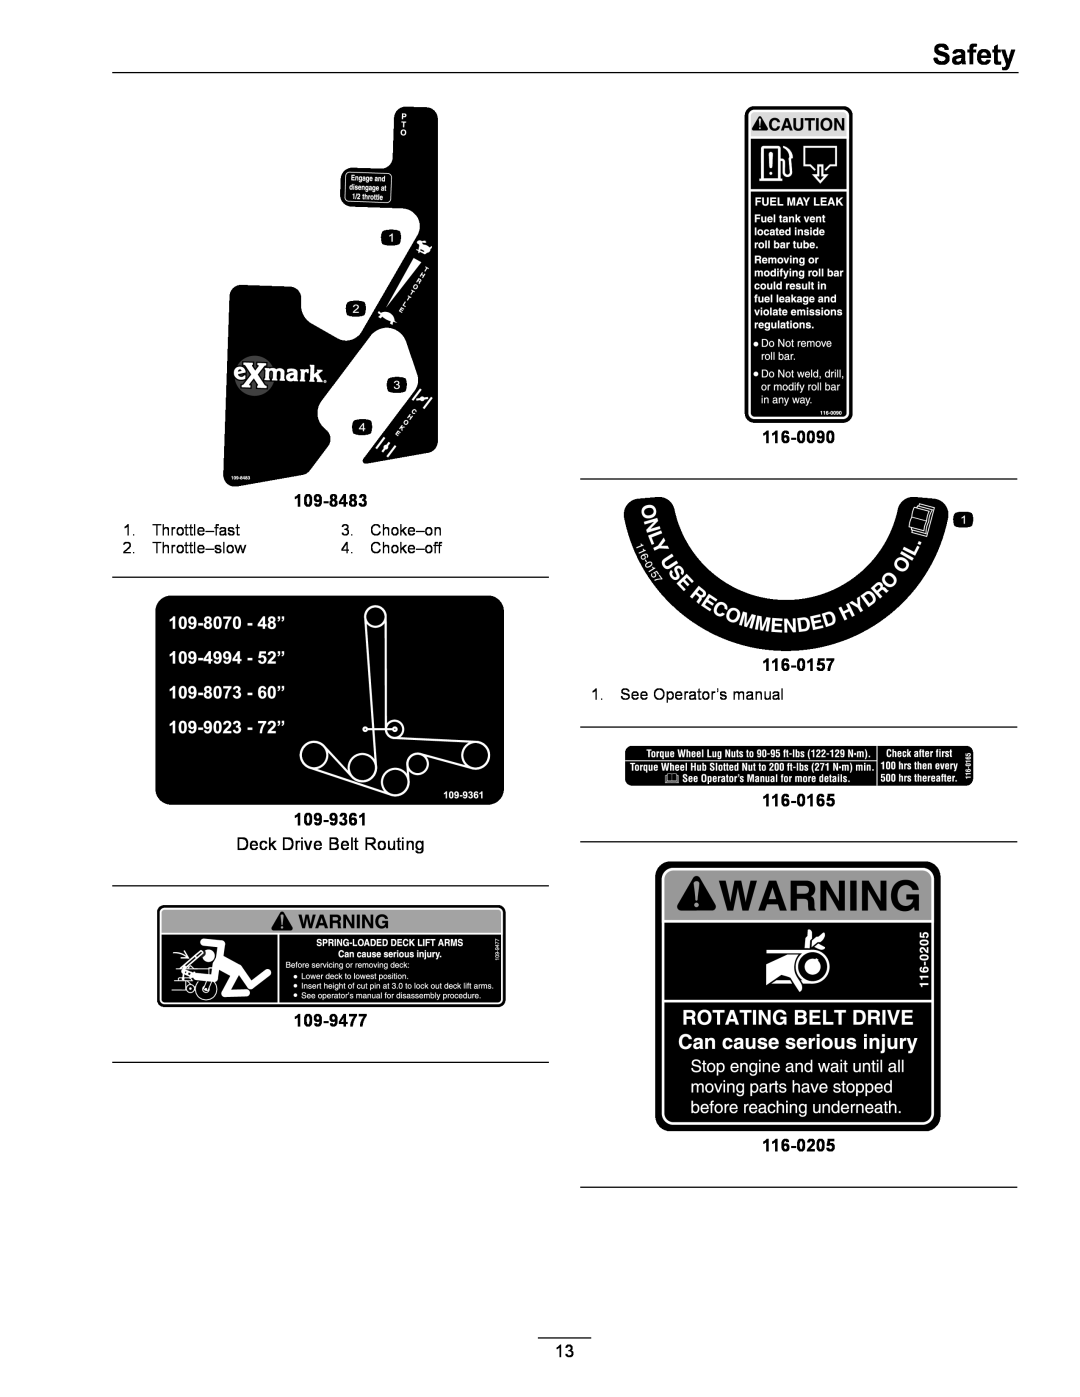 Exmark 4500-507 Safety, Deck Drive Belt Routing, Throttle-fast, Choke-on, Throttle-slow, Choke-off, See Operator’s manual 